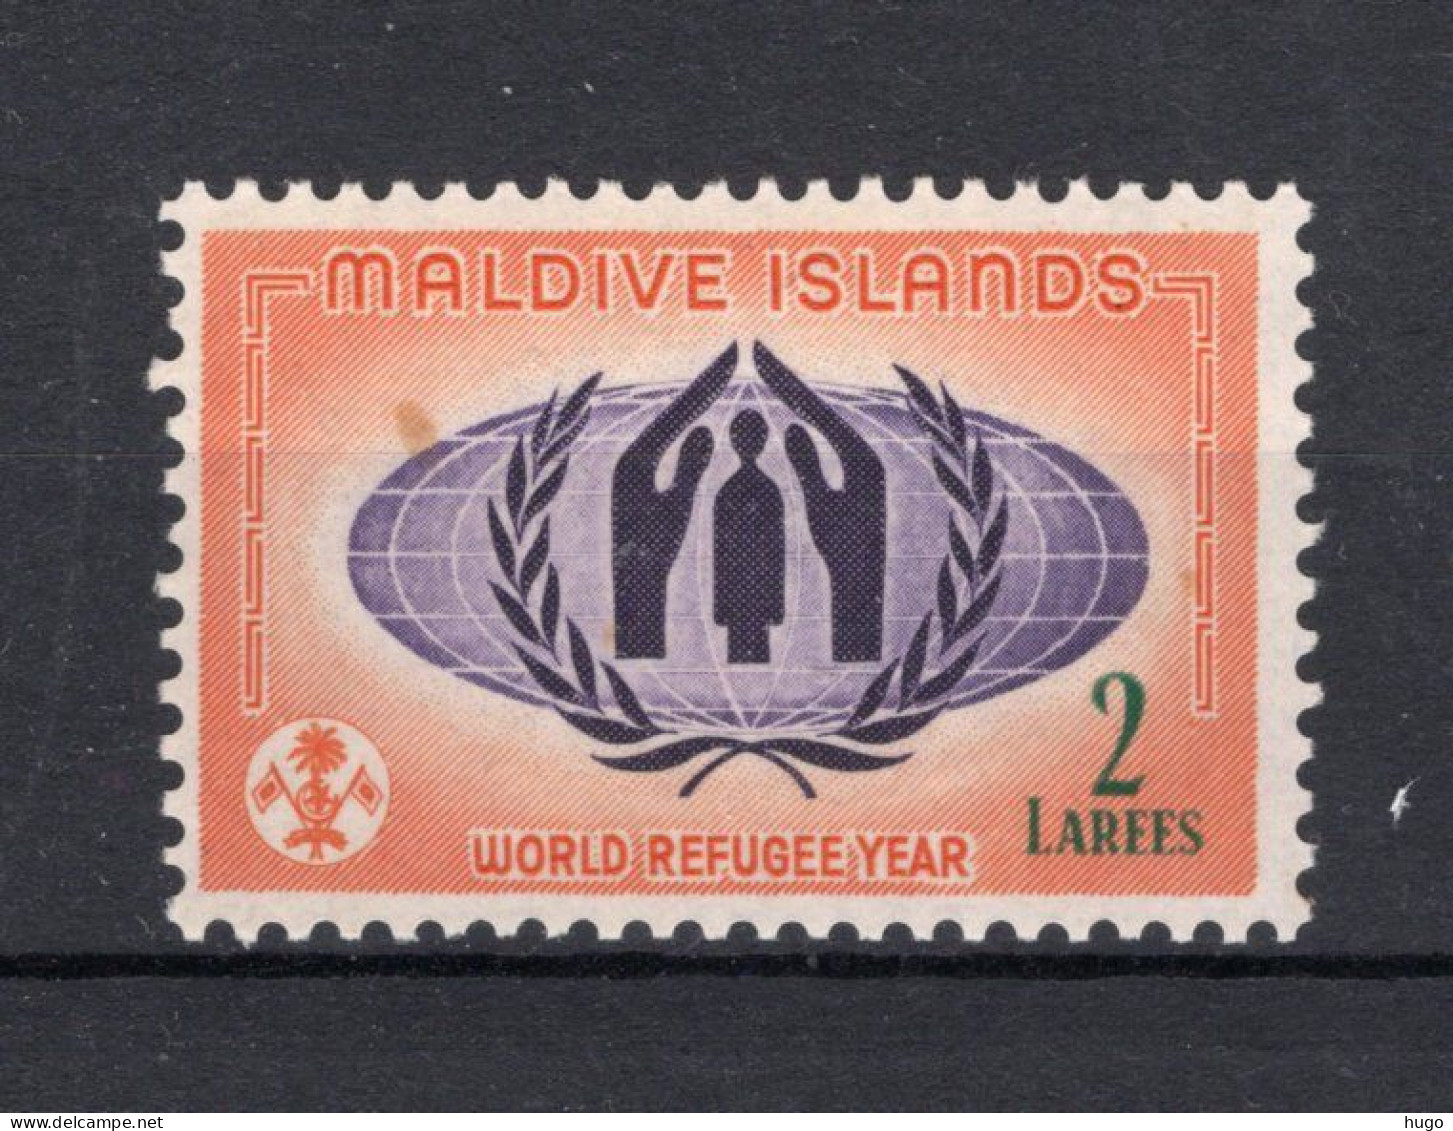 MALDIVE ISLANDS Yt. 39 MNH 1960 - Malediven (...-1965)